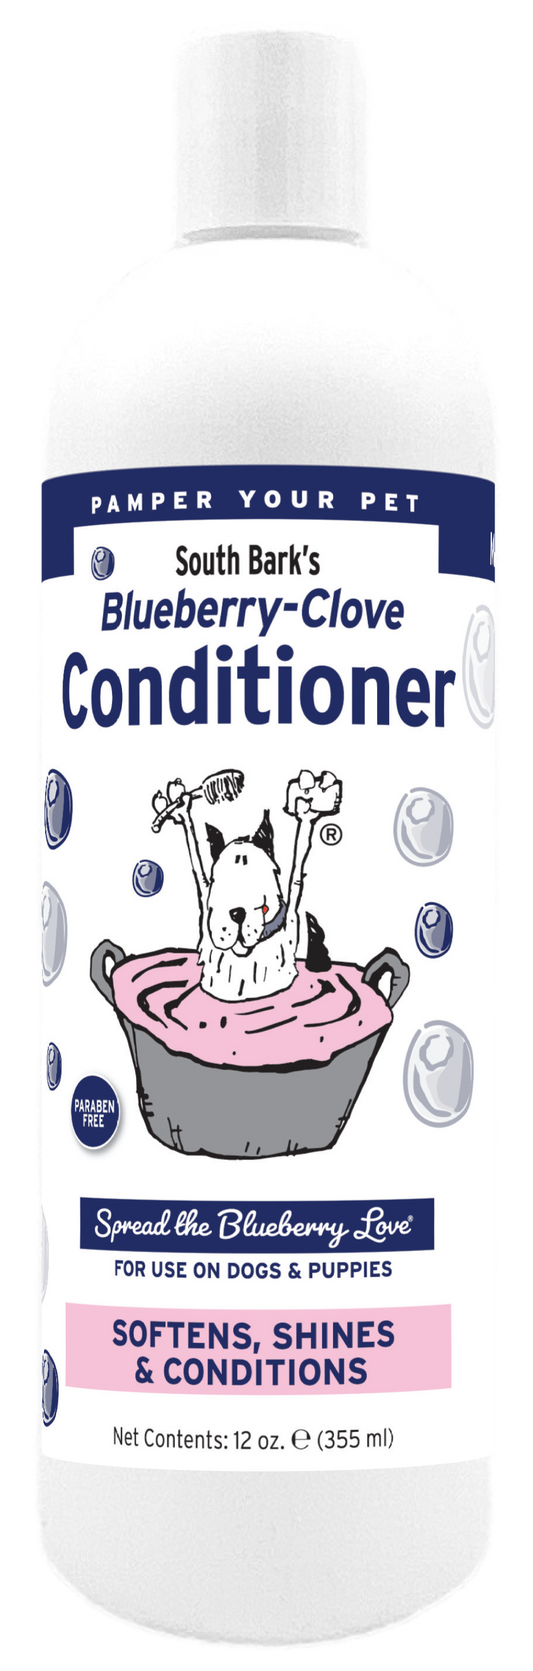 Blueberry-Clove Pet Conditioner | South Bark